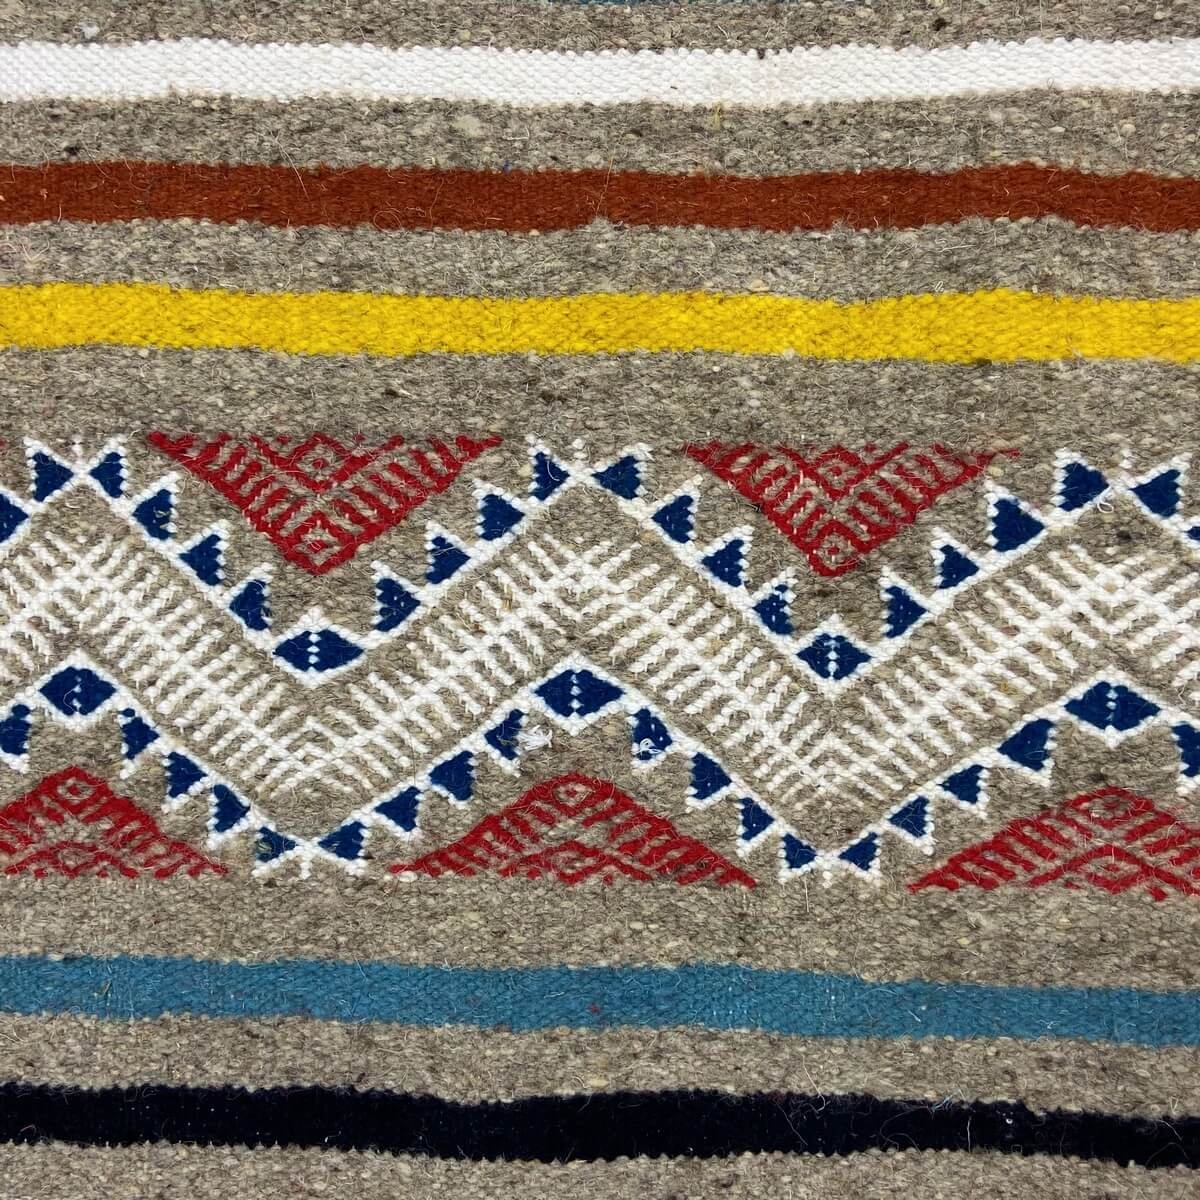 Berber tapijt Tapijt Kilim Luki 110x200 Veelkleurig (Handgeweven, Wol, Tunesië) Tunesisch kilimdeken, Marokkaanse stijl. Rechtho